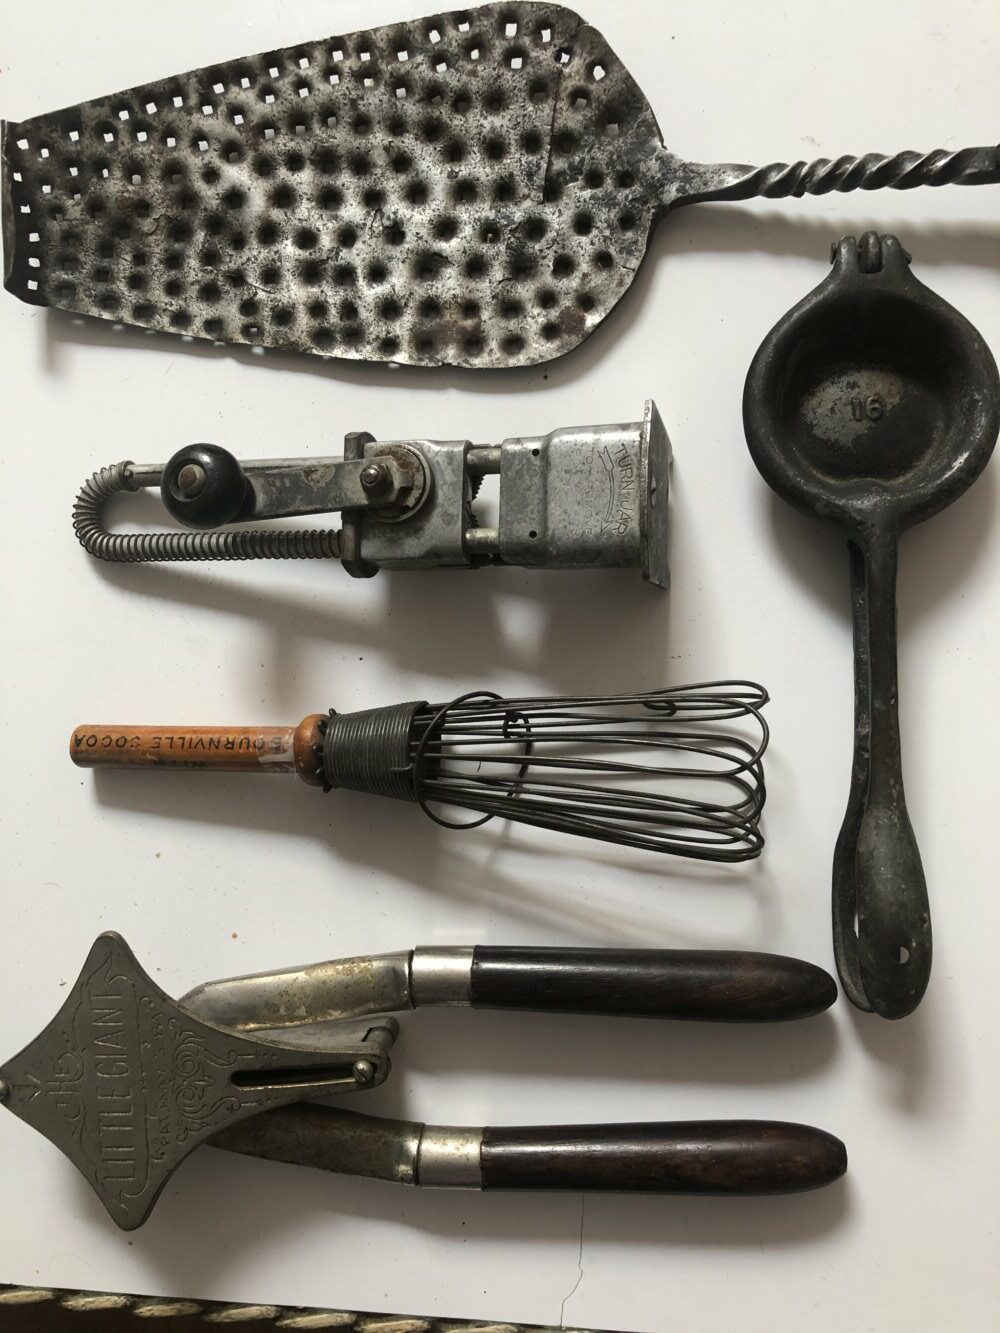 25 Vintage Kitchen Tools - History of Kitchen Tools